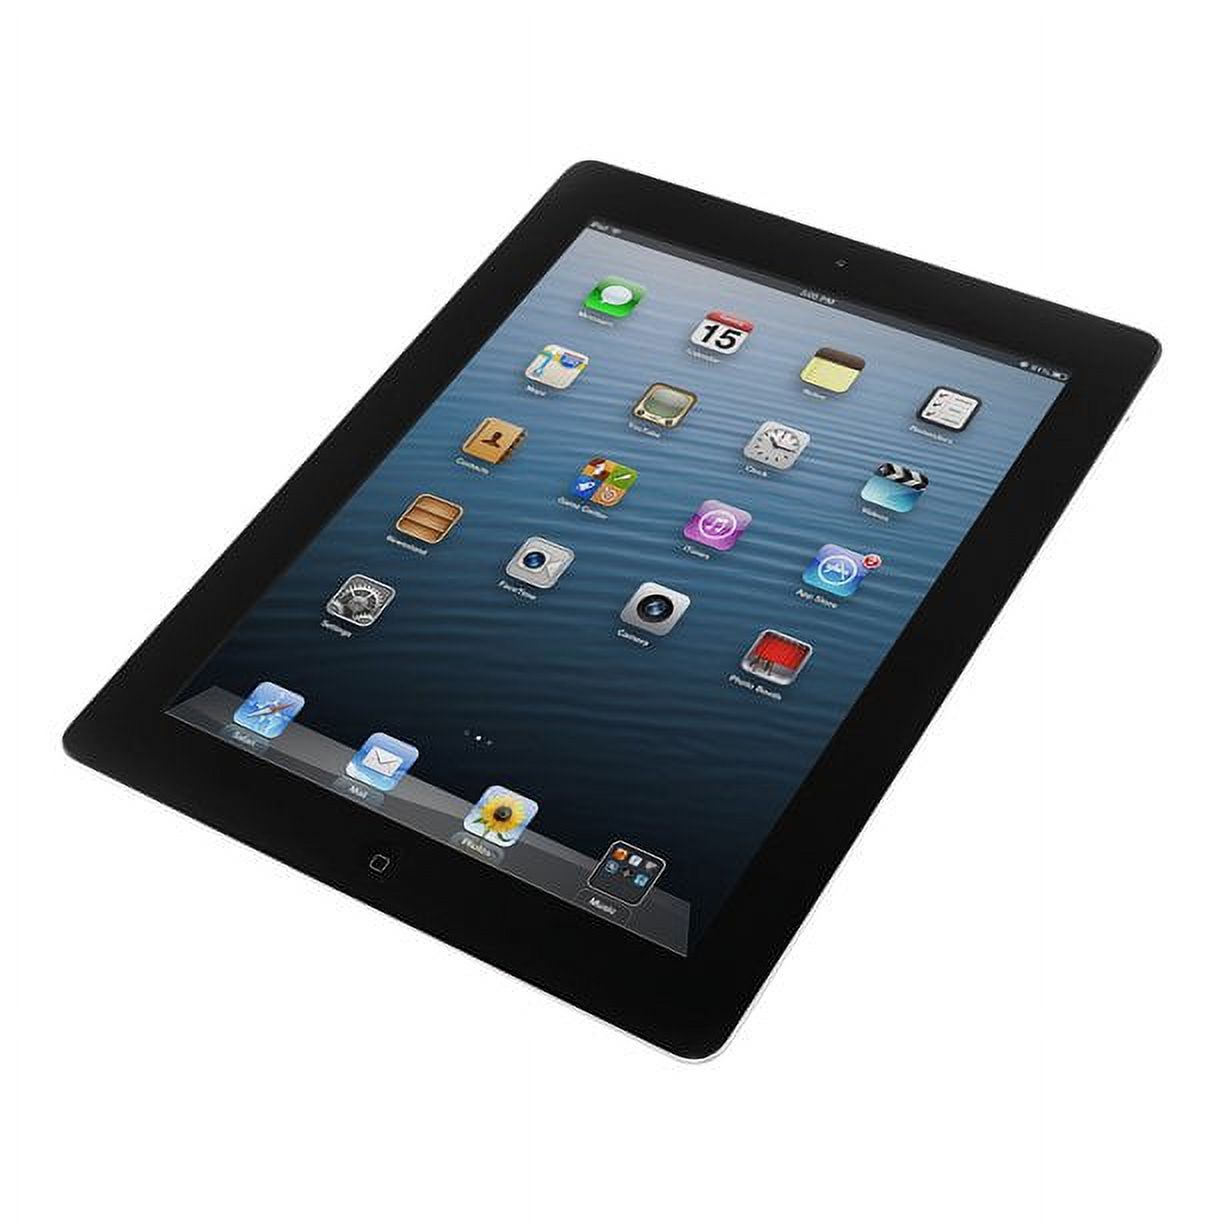 Apple MC954LL/A iPad 2 16GB with Wi-Fi - Black (Used ) - image 4 of 4